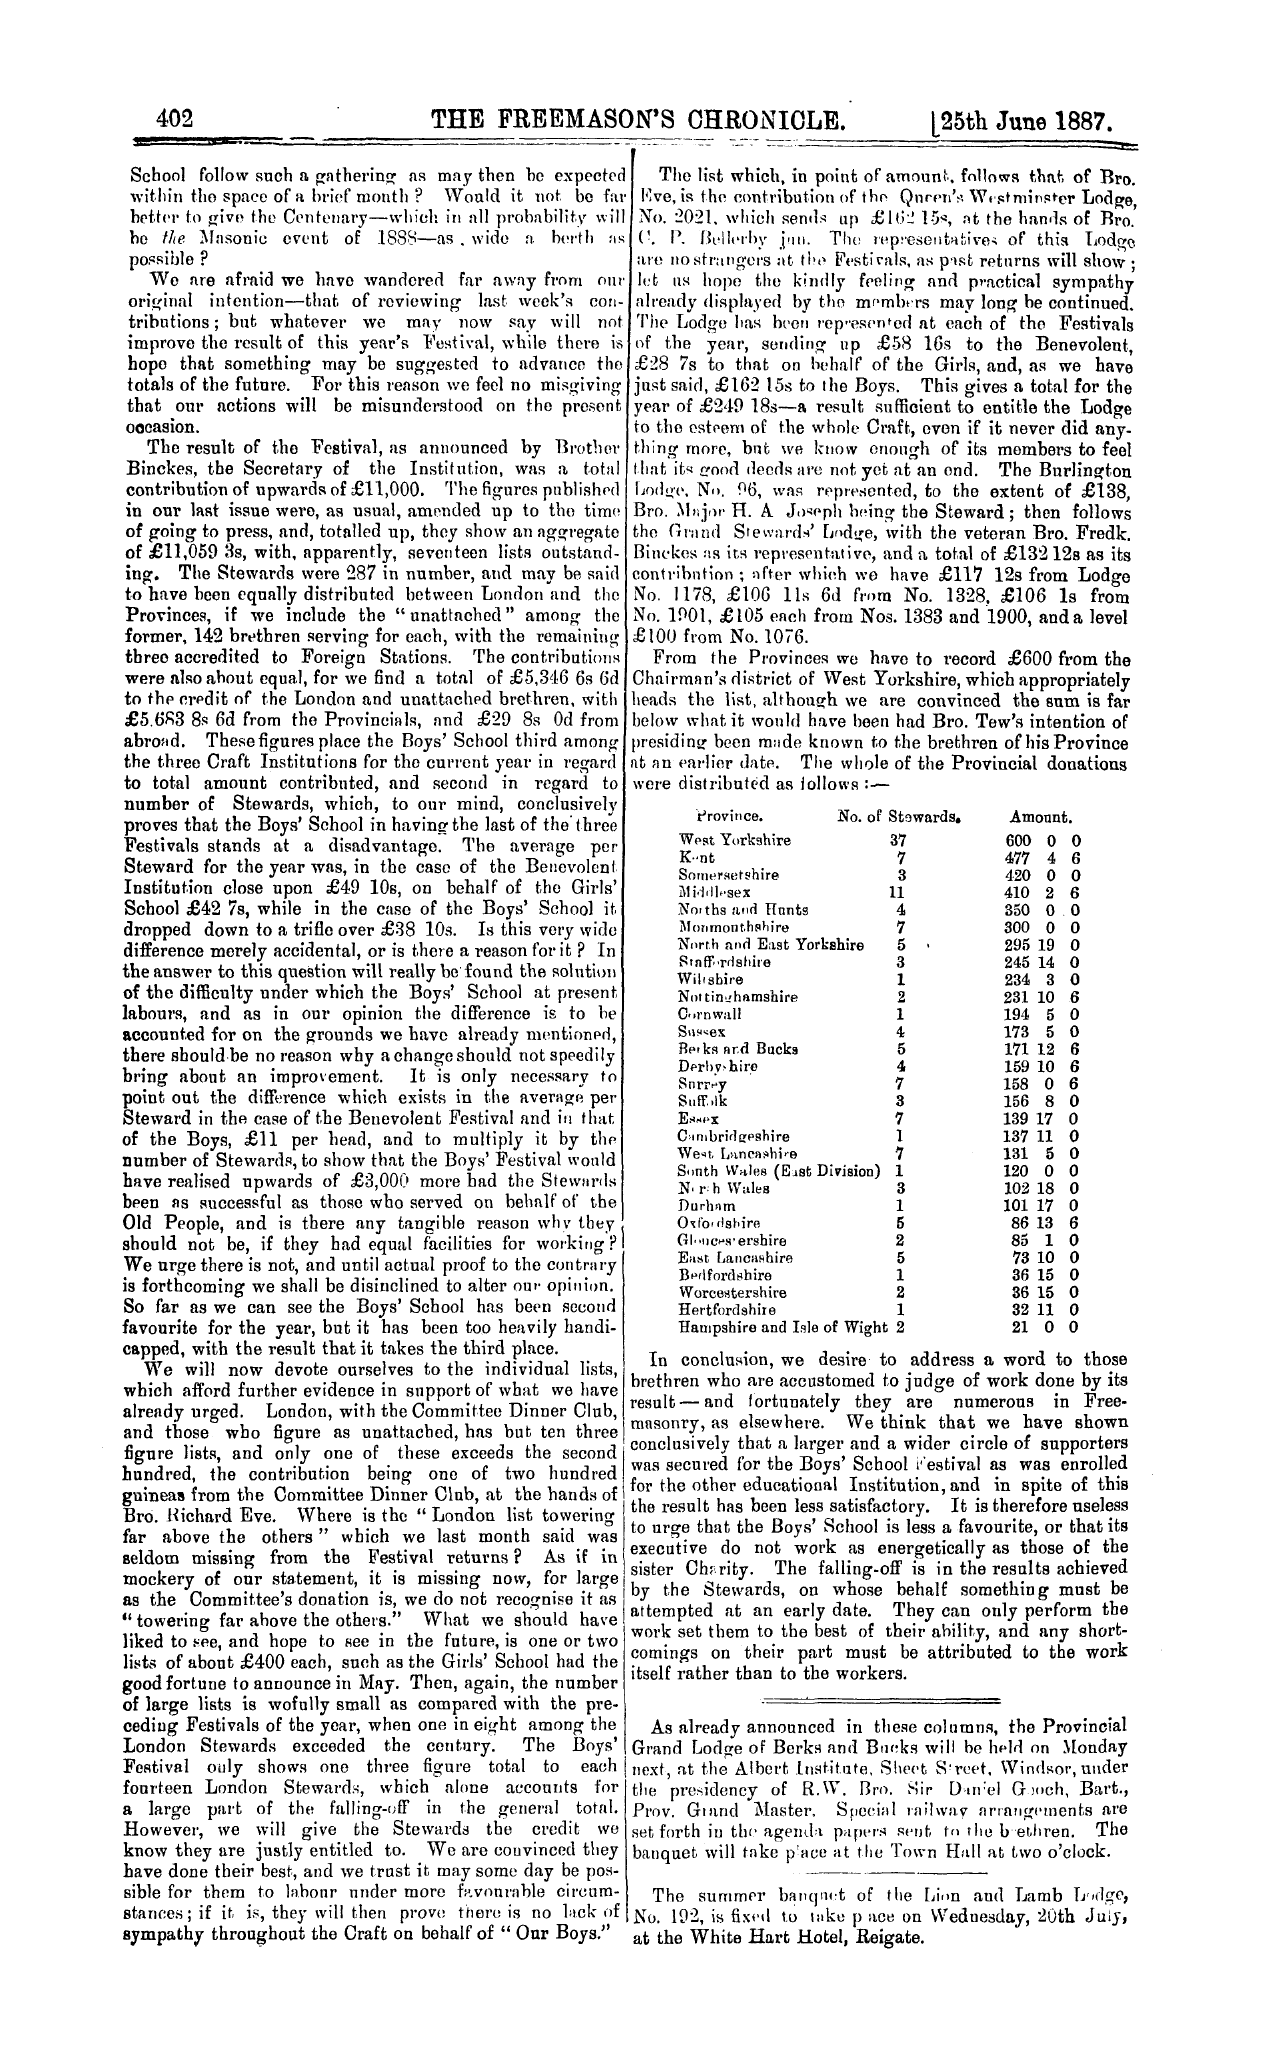 The Freemason's Chronicle: 1887-06-25 - The Festival Returns.